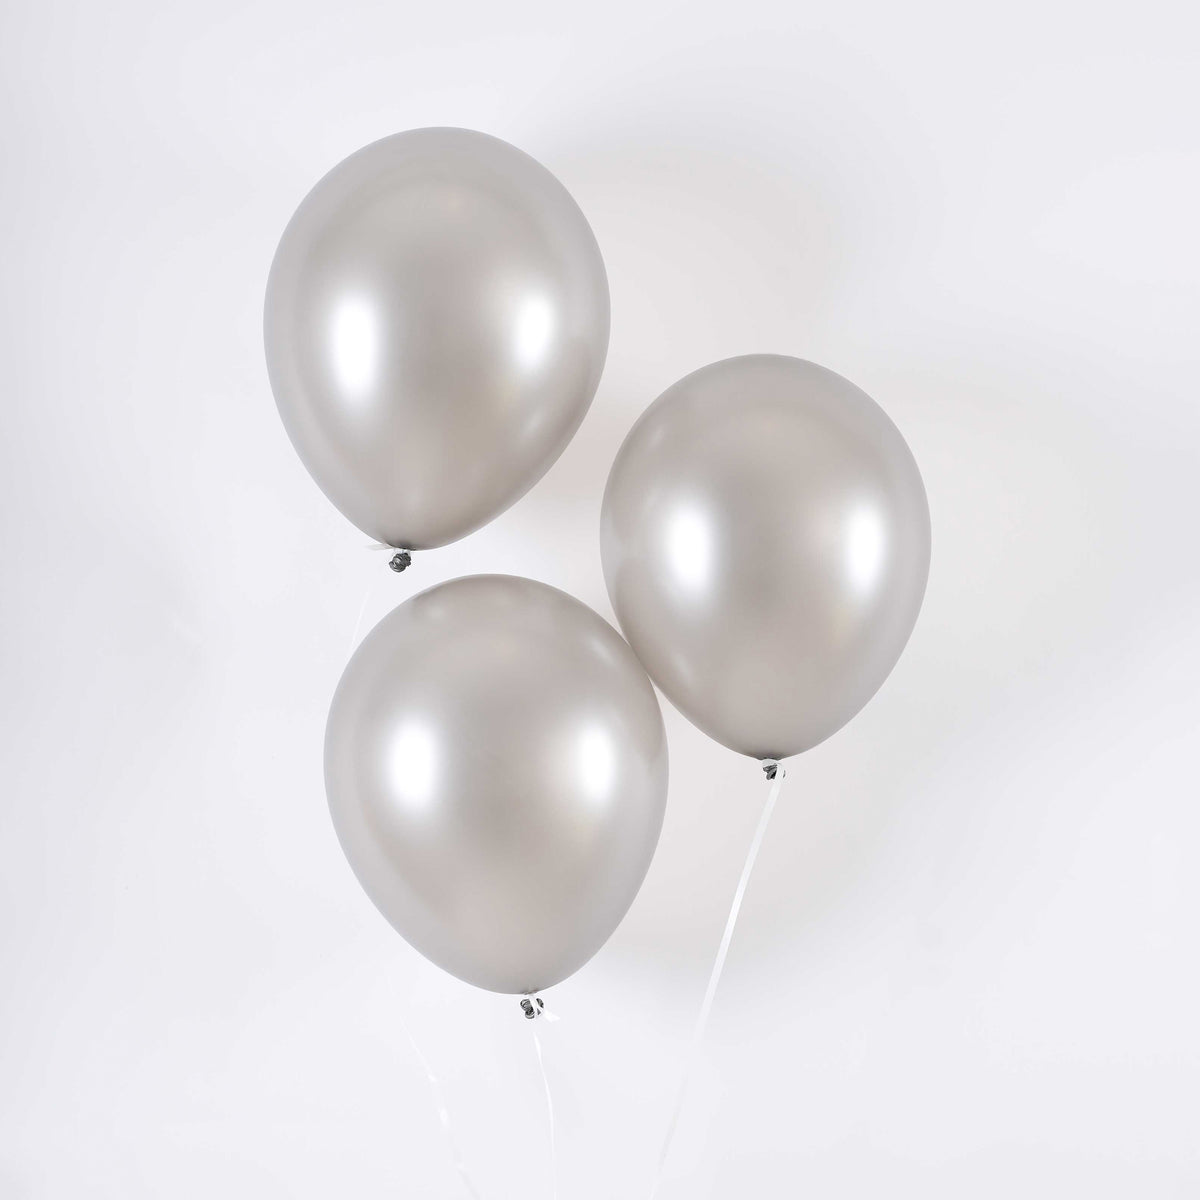 3 Latex Balloons